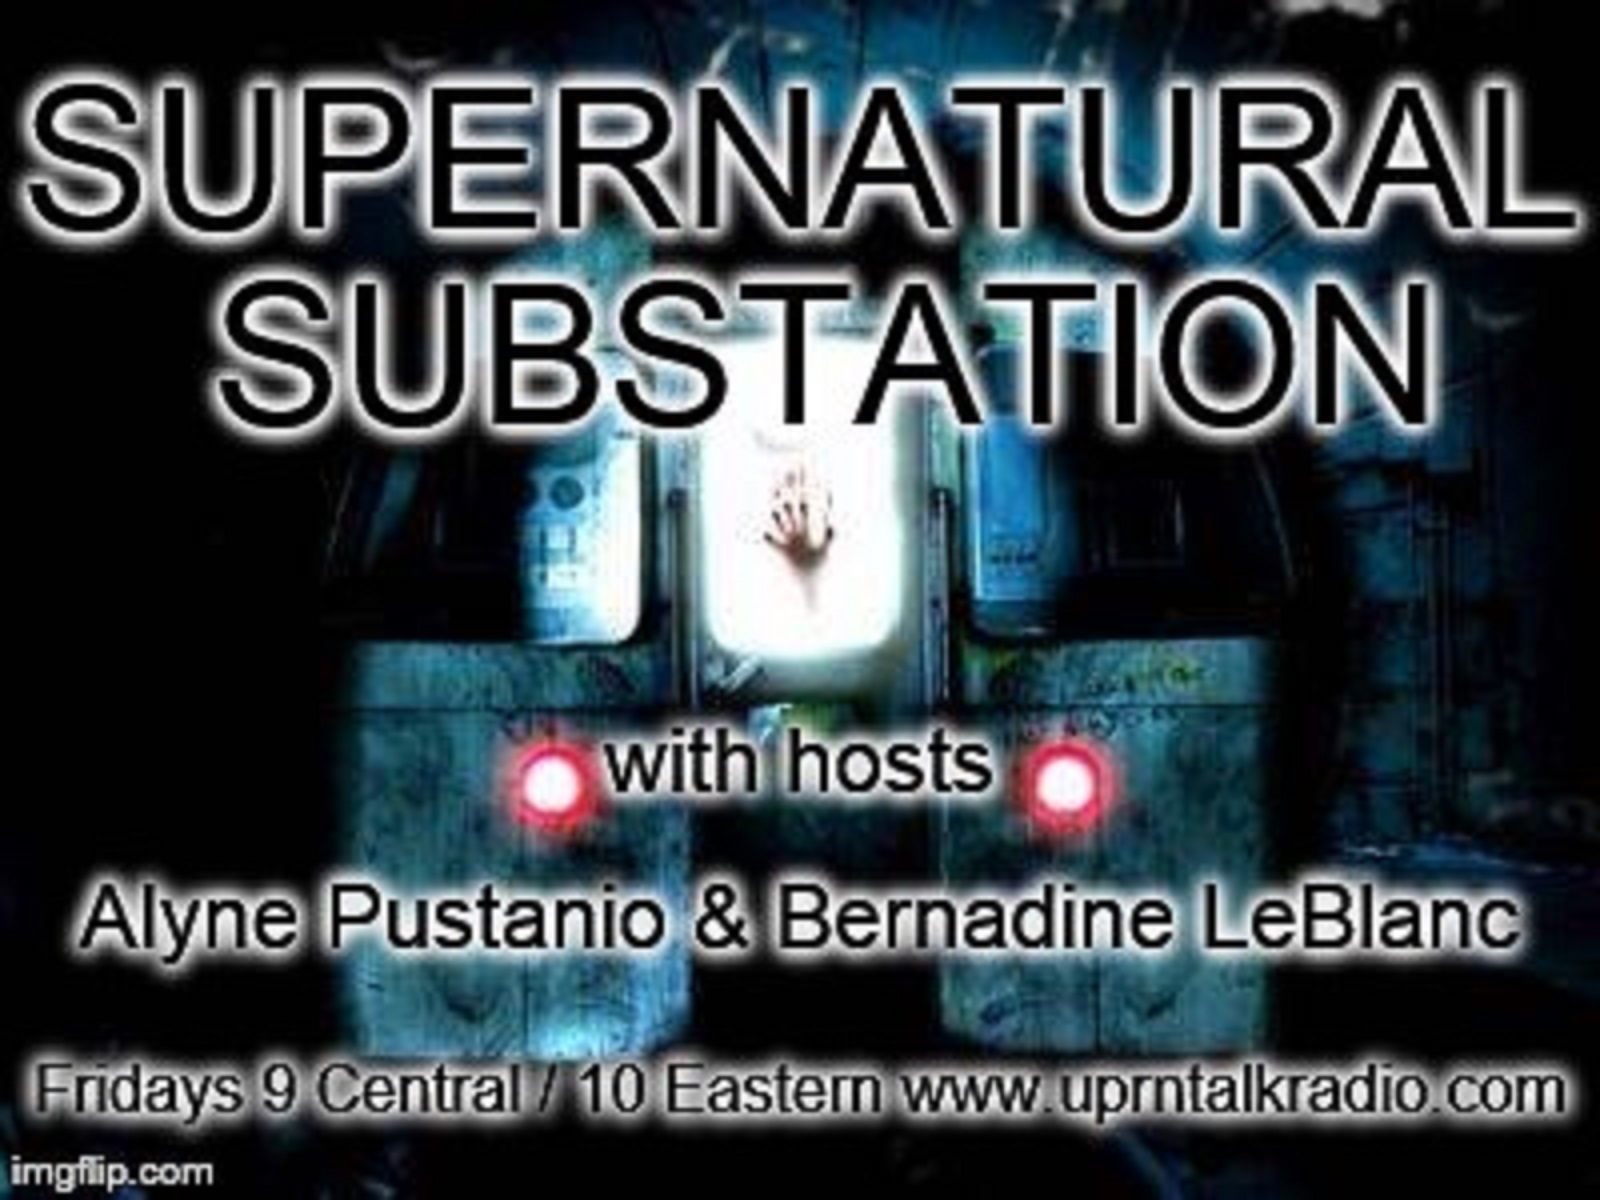 SUPERNATURAL SUBSTATION-8/11/2017-LYNN RUSSELL THE WONDER OF YOU-HOSTS ALYNE PUSTANIO & BERNADINE LeBLANC